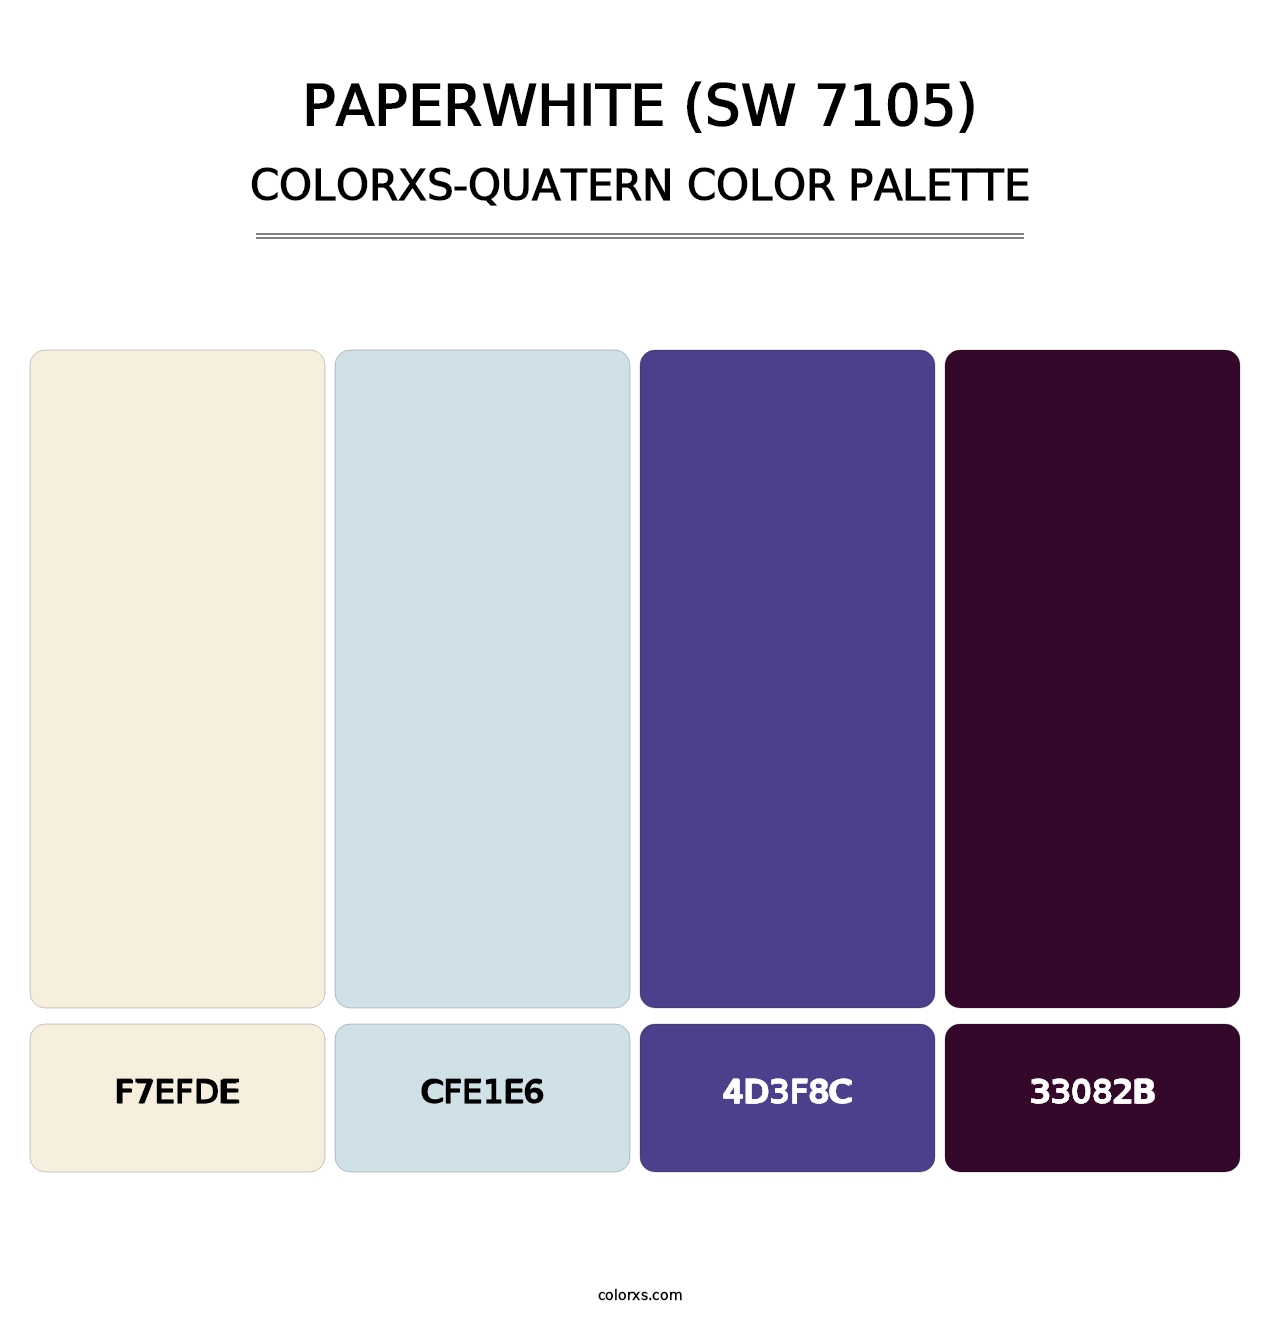 Paperwhite (SW 7105) - Colorxs Quatern Palette